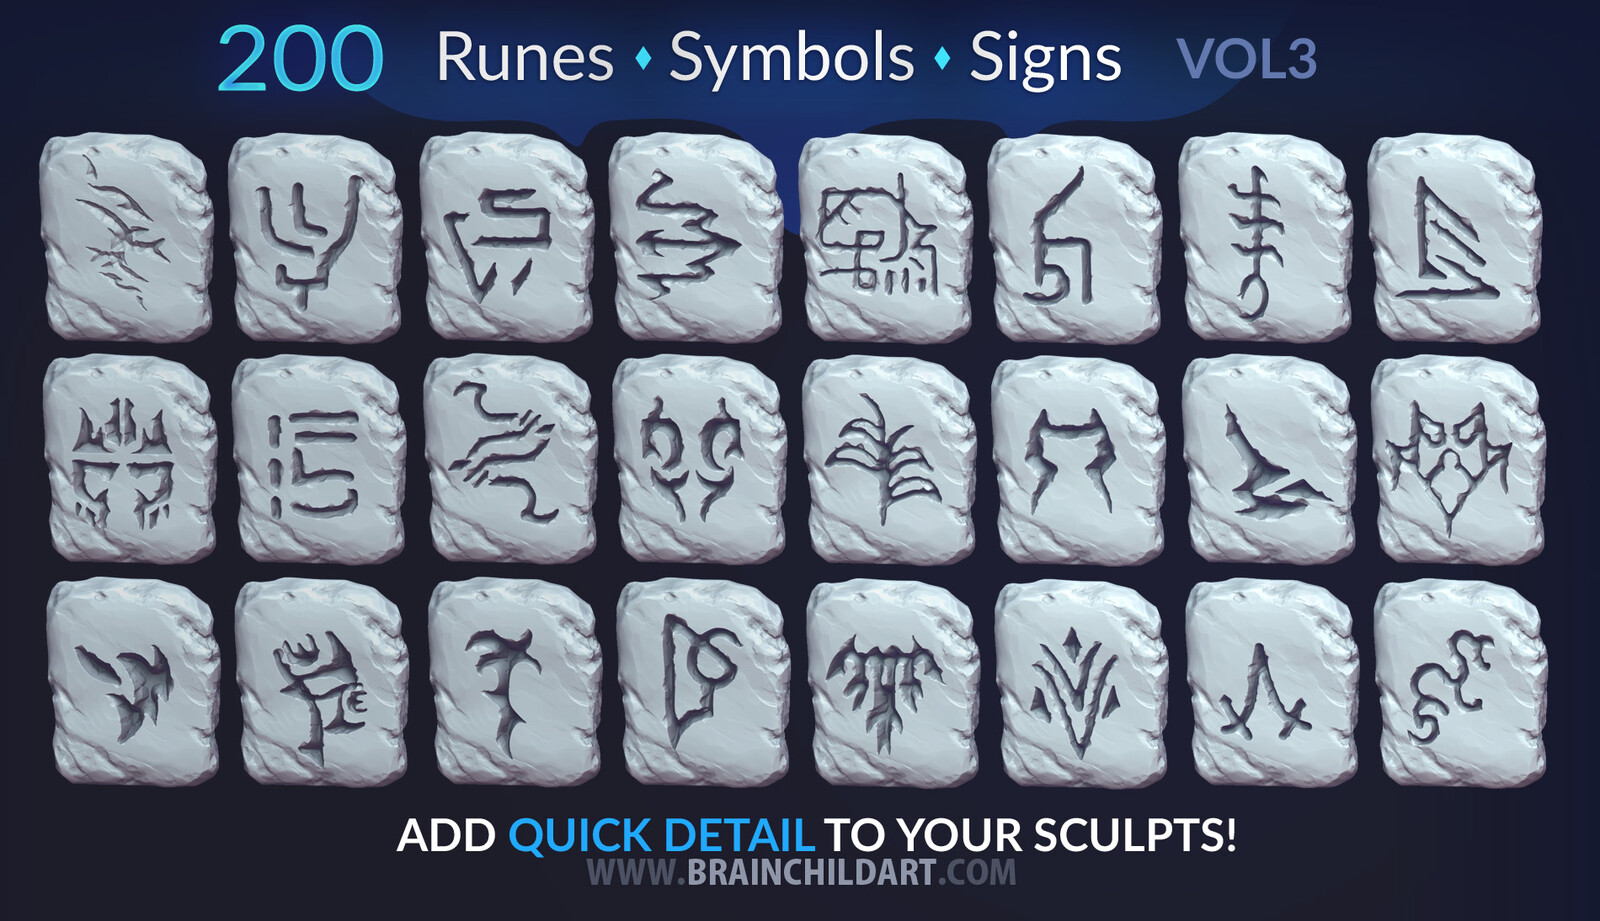 Buy
https://www.artstation.com/a/1258631 | VOL. 3 - 200 Runes, Signs &amp; Symbols (800 Alpha Textures) Zbrush, Blender, Substance...